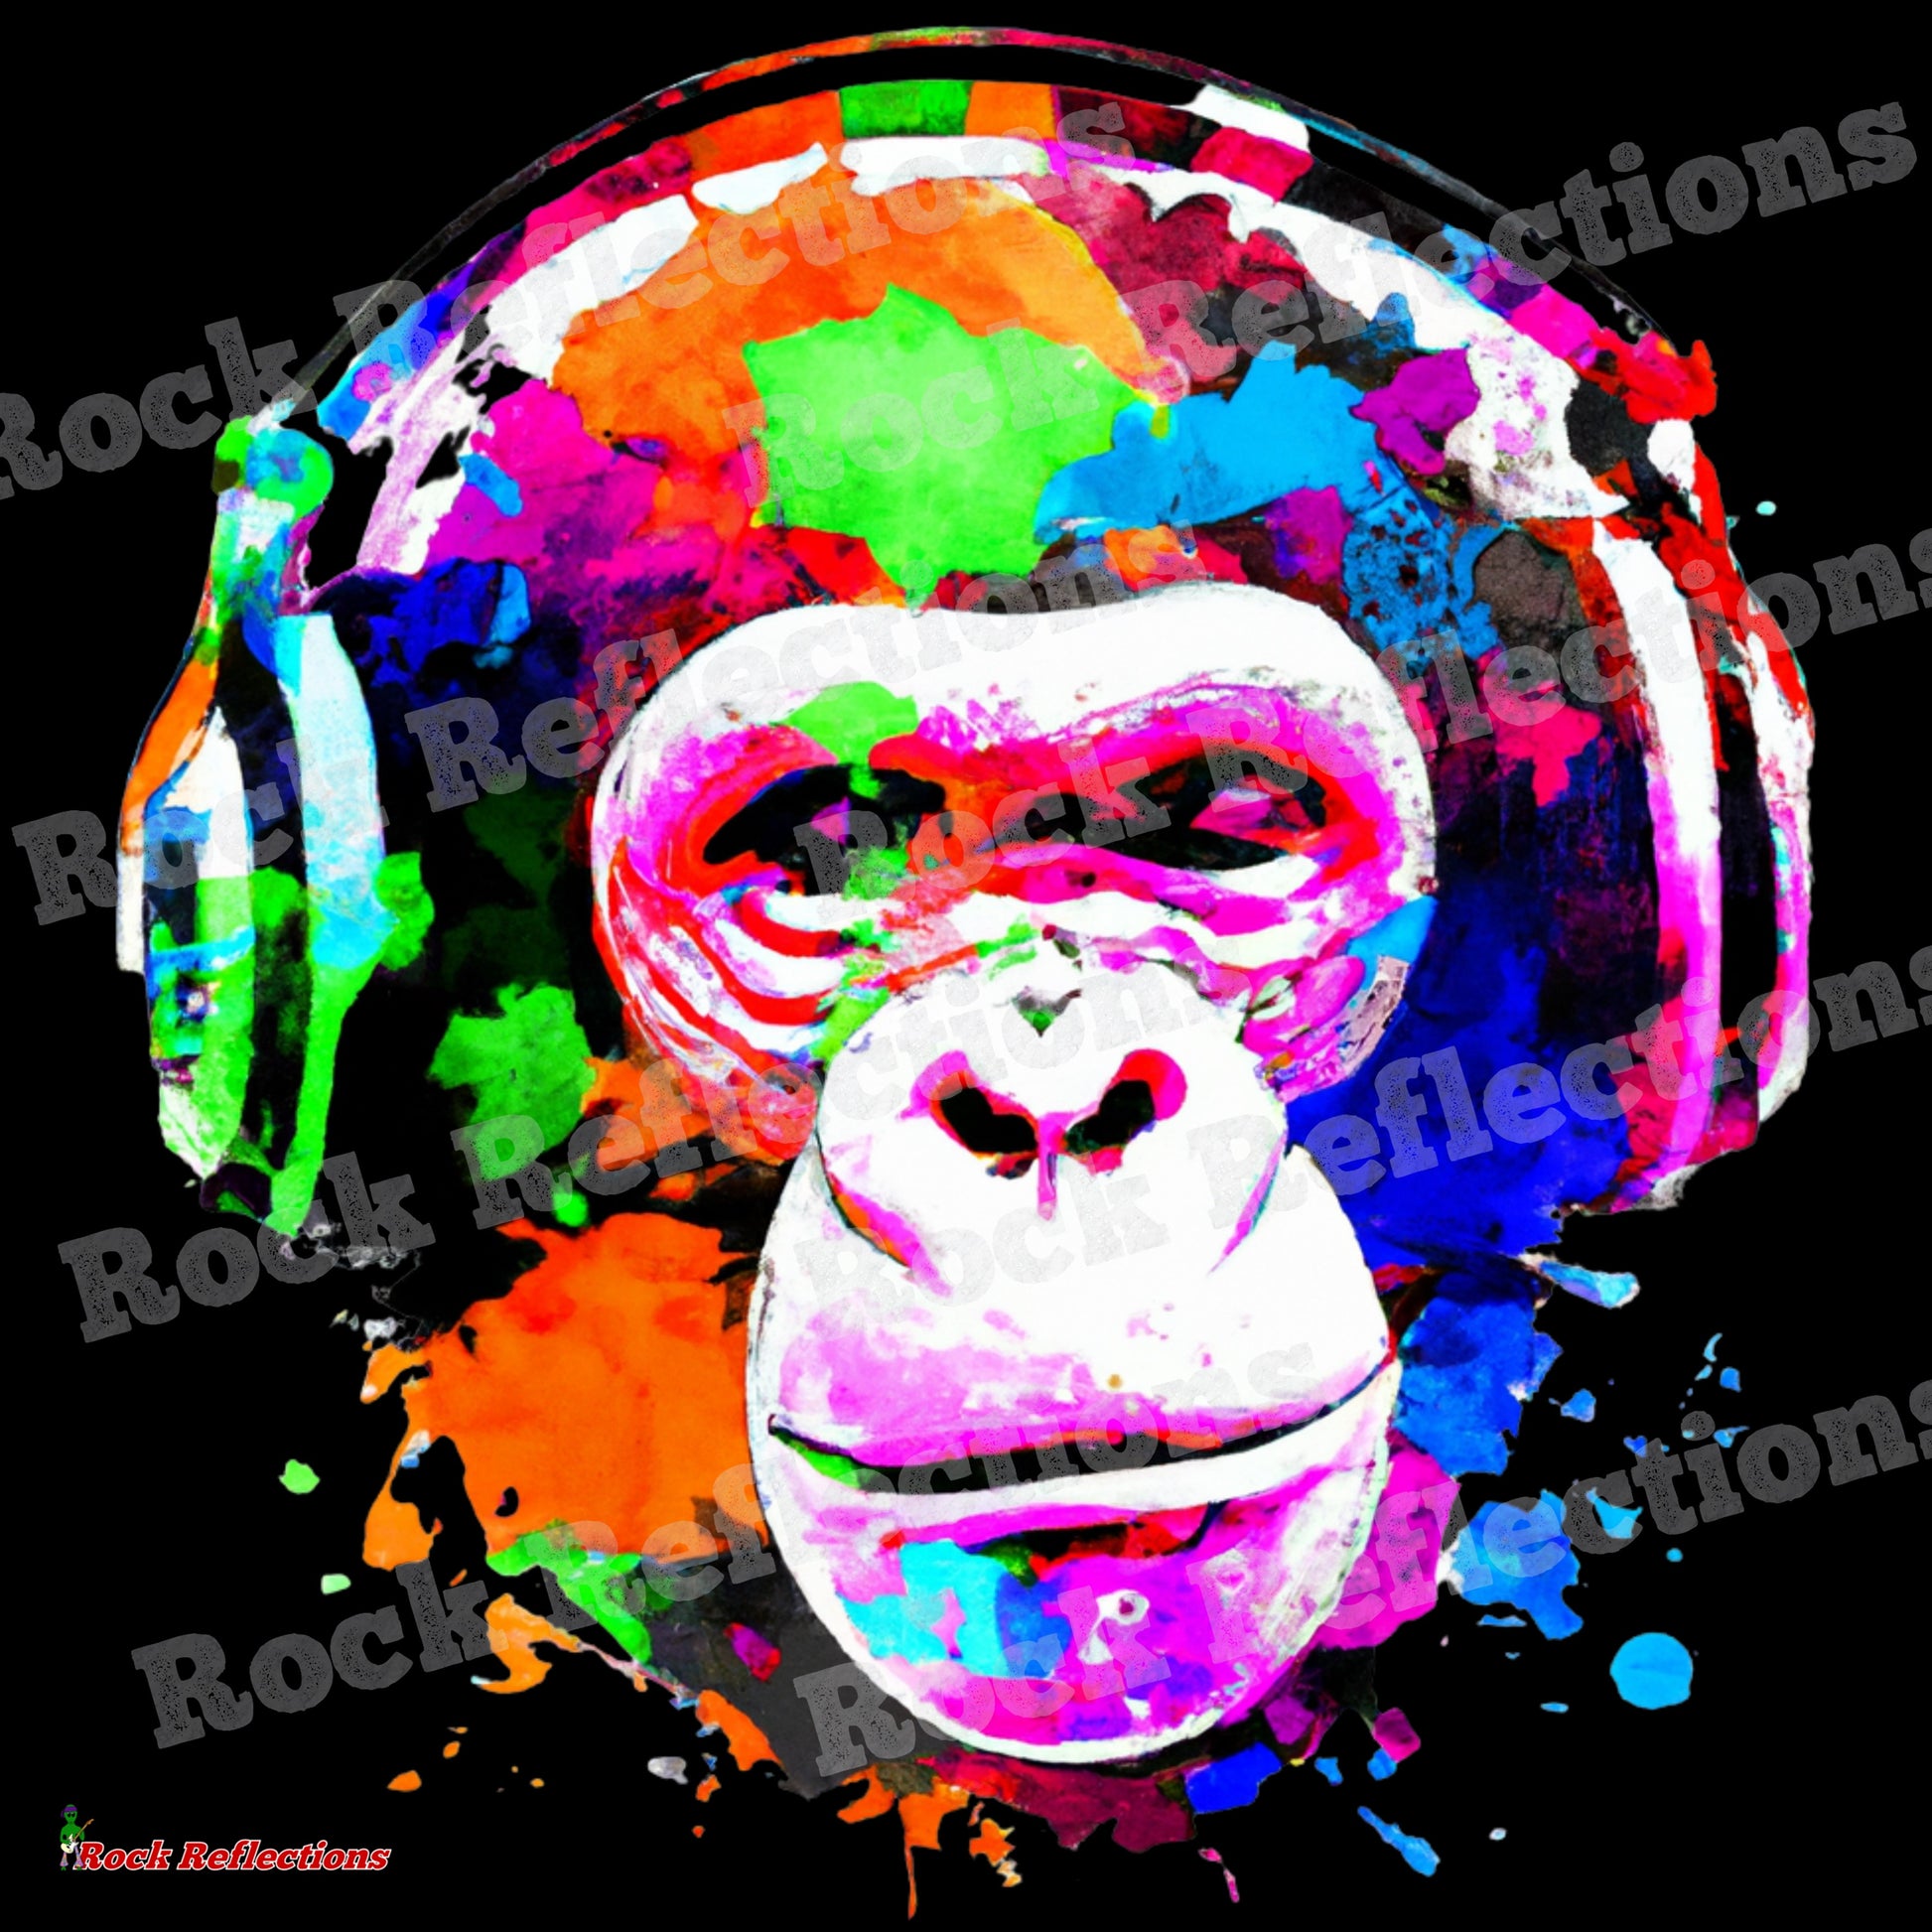 Chimp Tunes T-Shirt SPOD